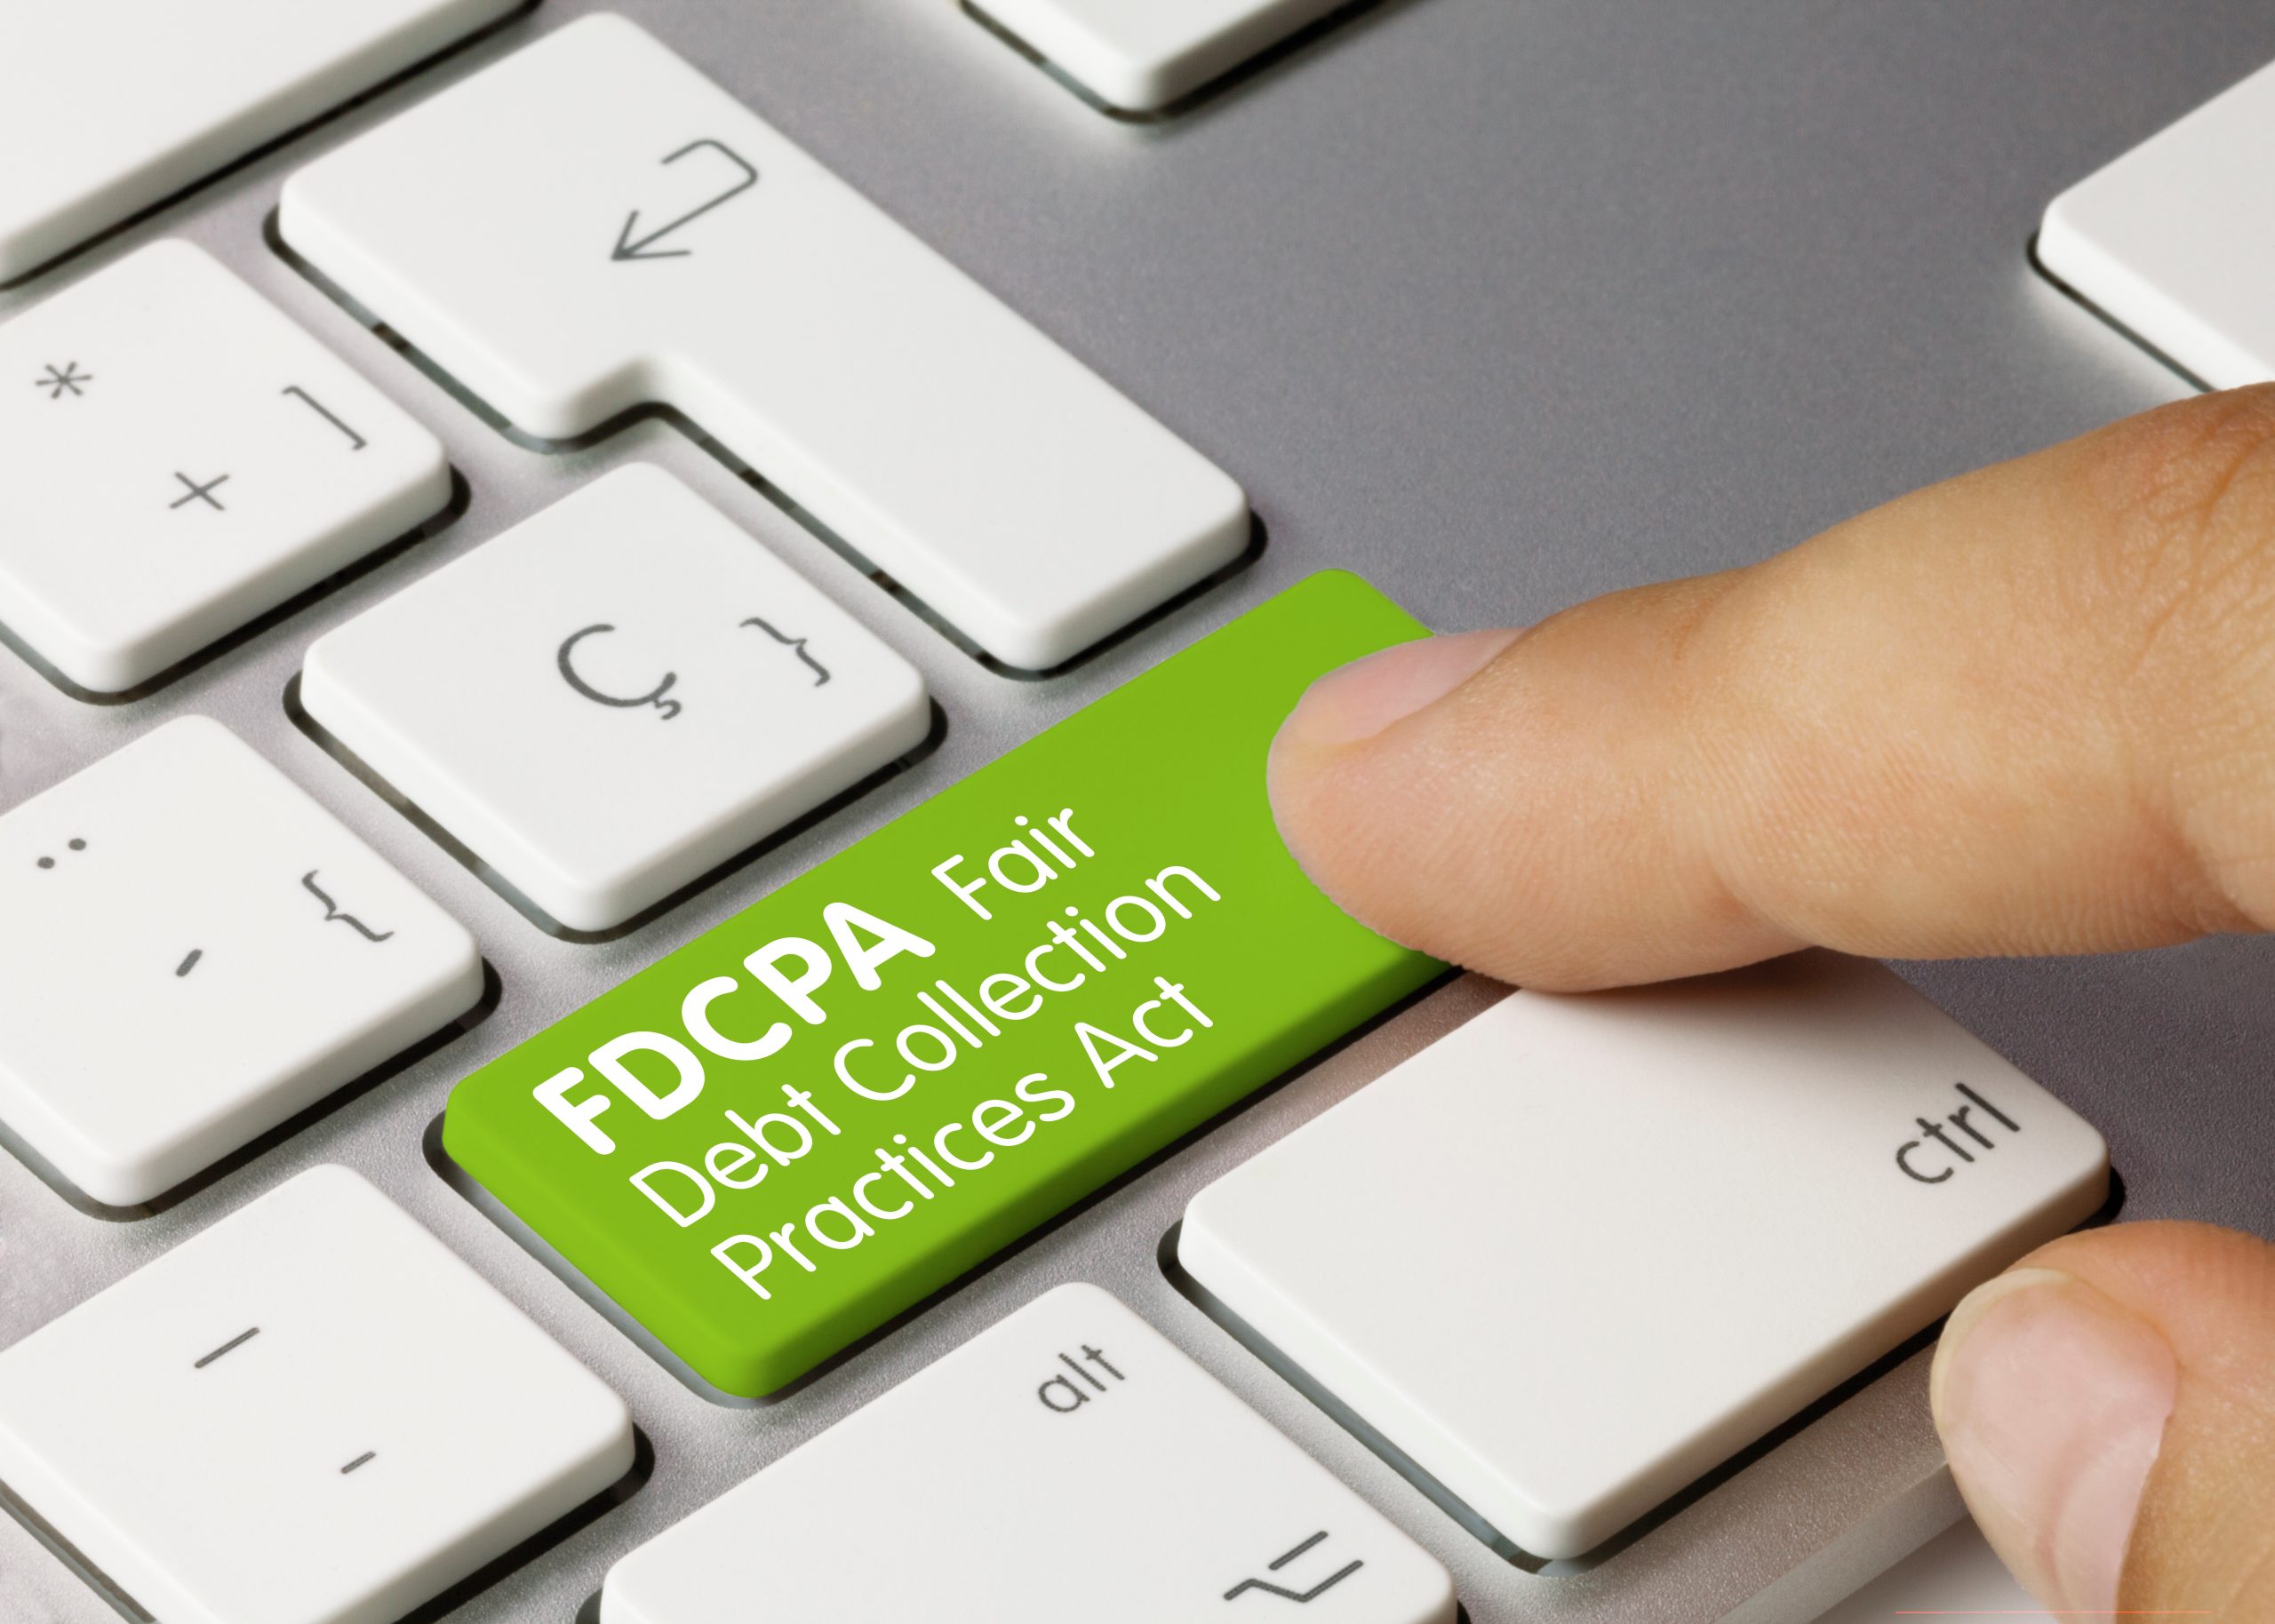 FDCPA Fair Debt Collection Practices Act - Inscription on Green Keyboard Key.